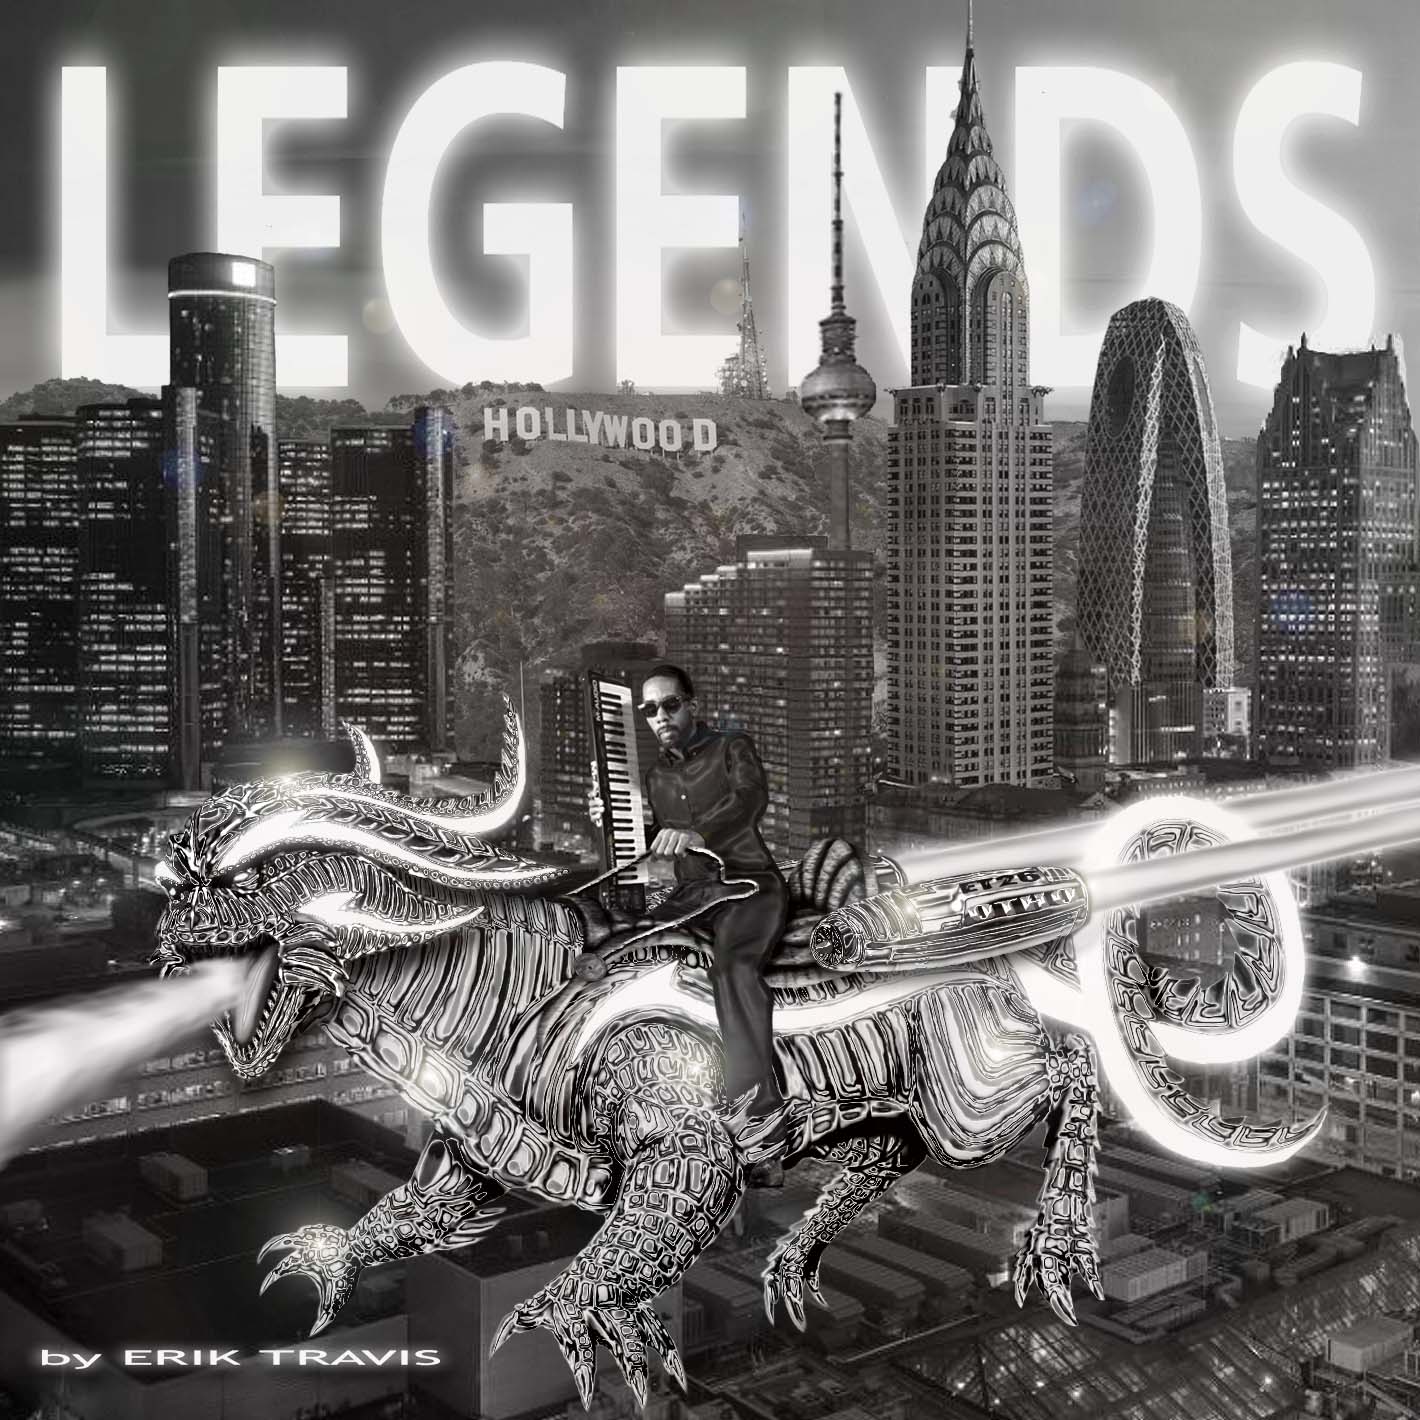 Erik Travis 'Legends' 2x12"